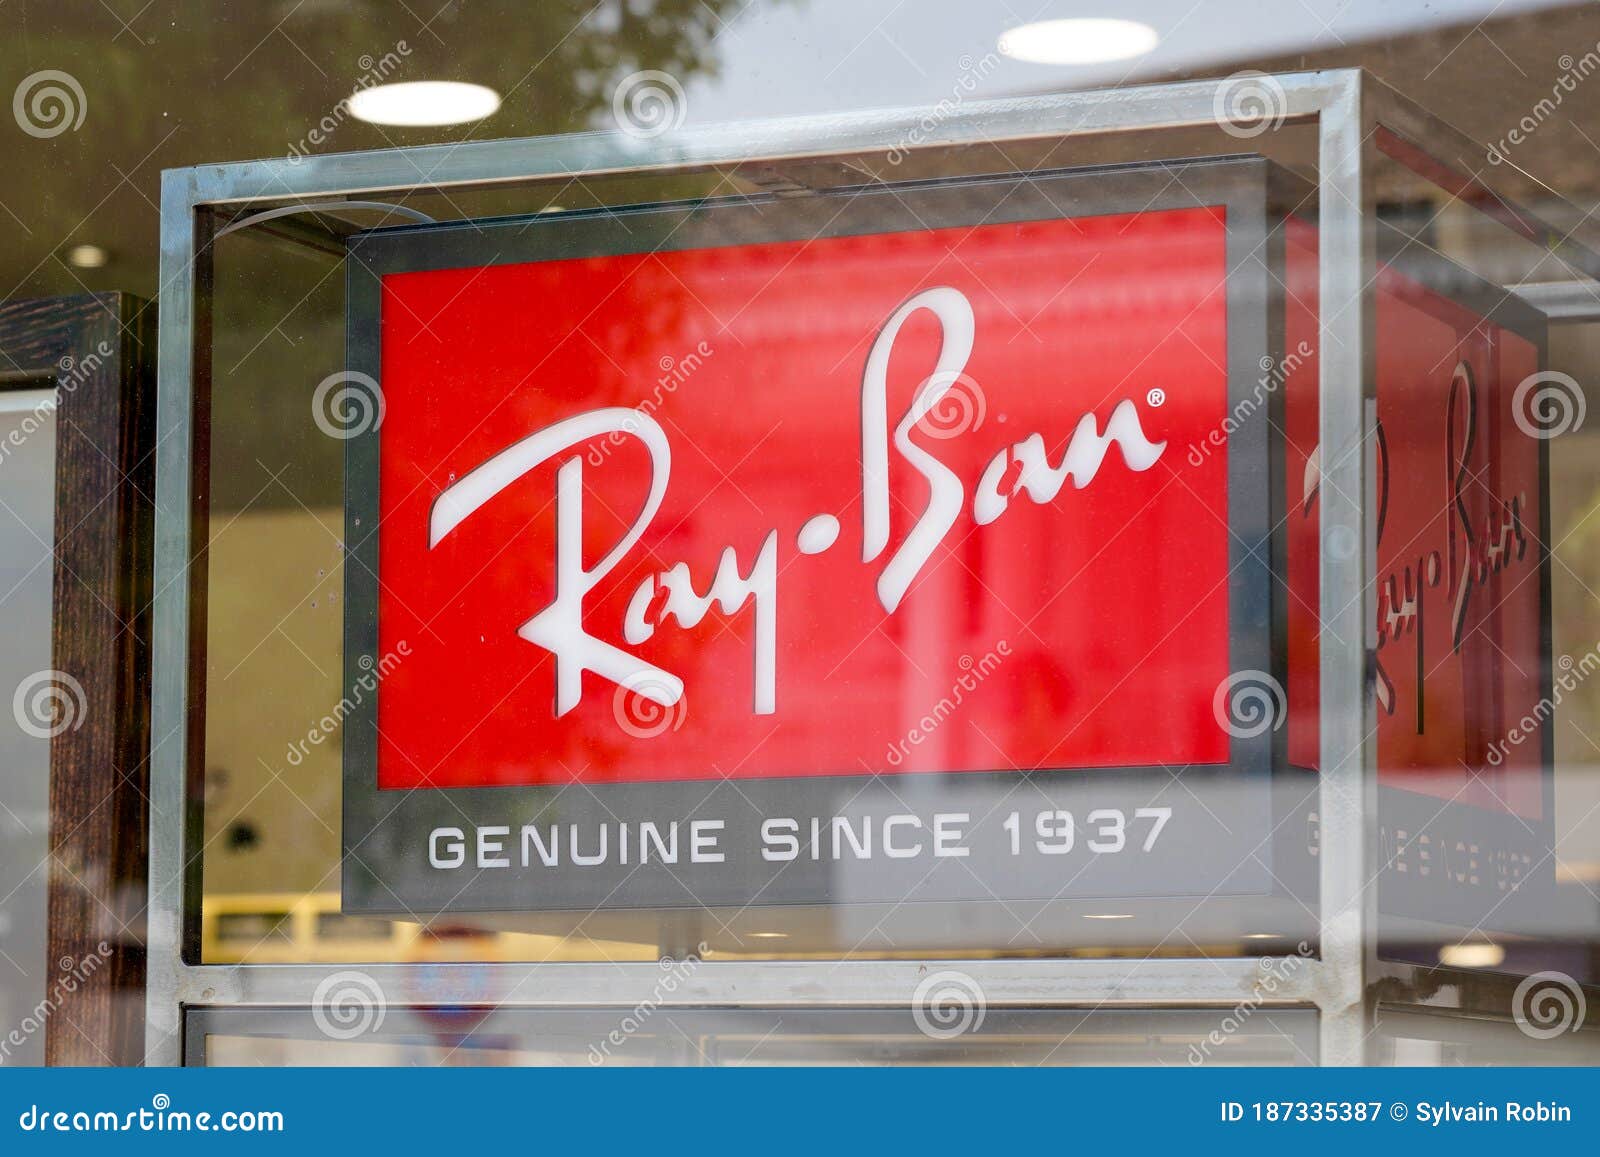 ray ban shop sydney